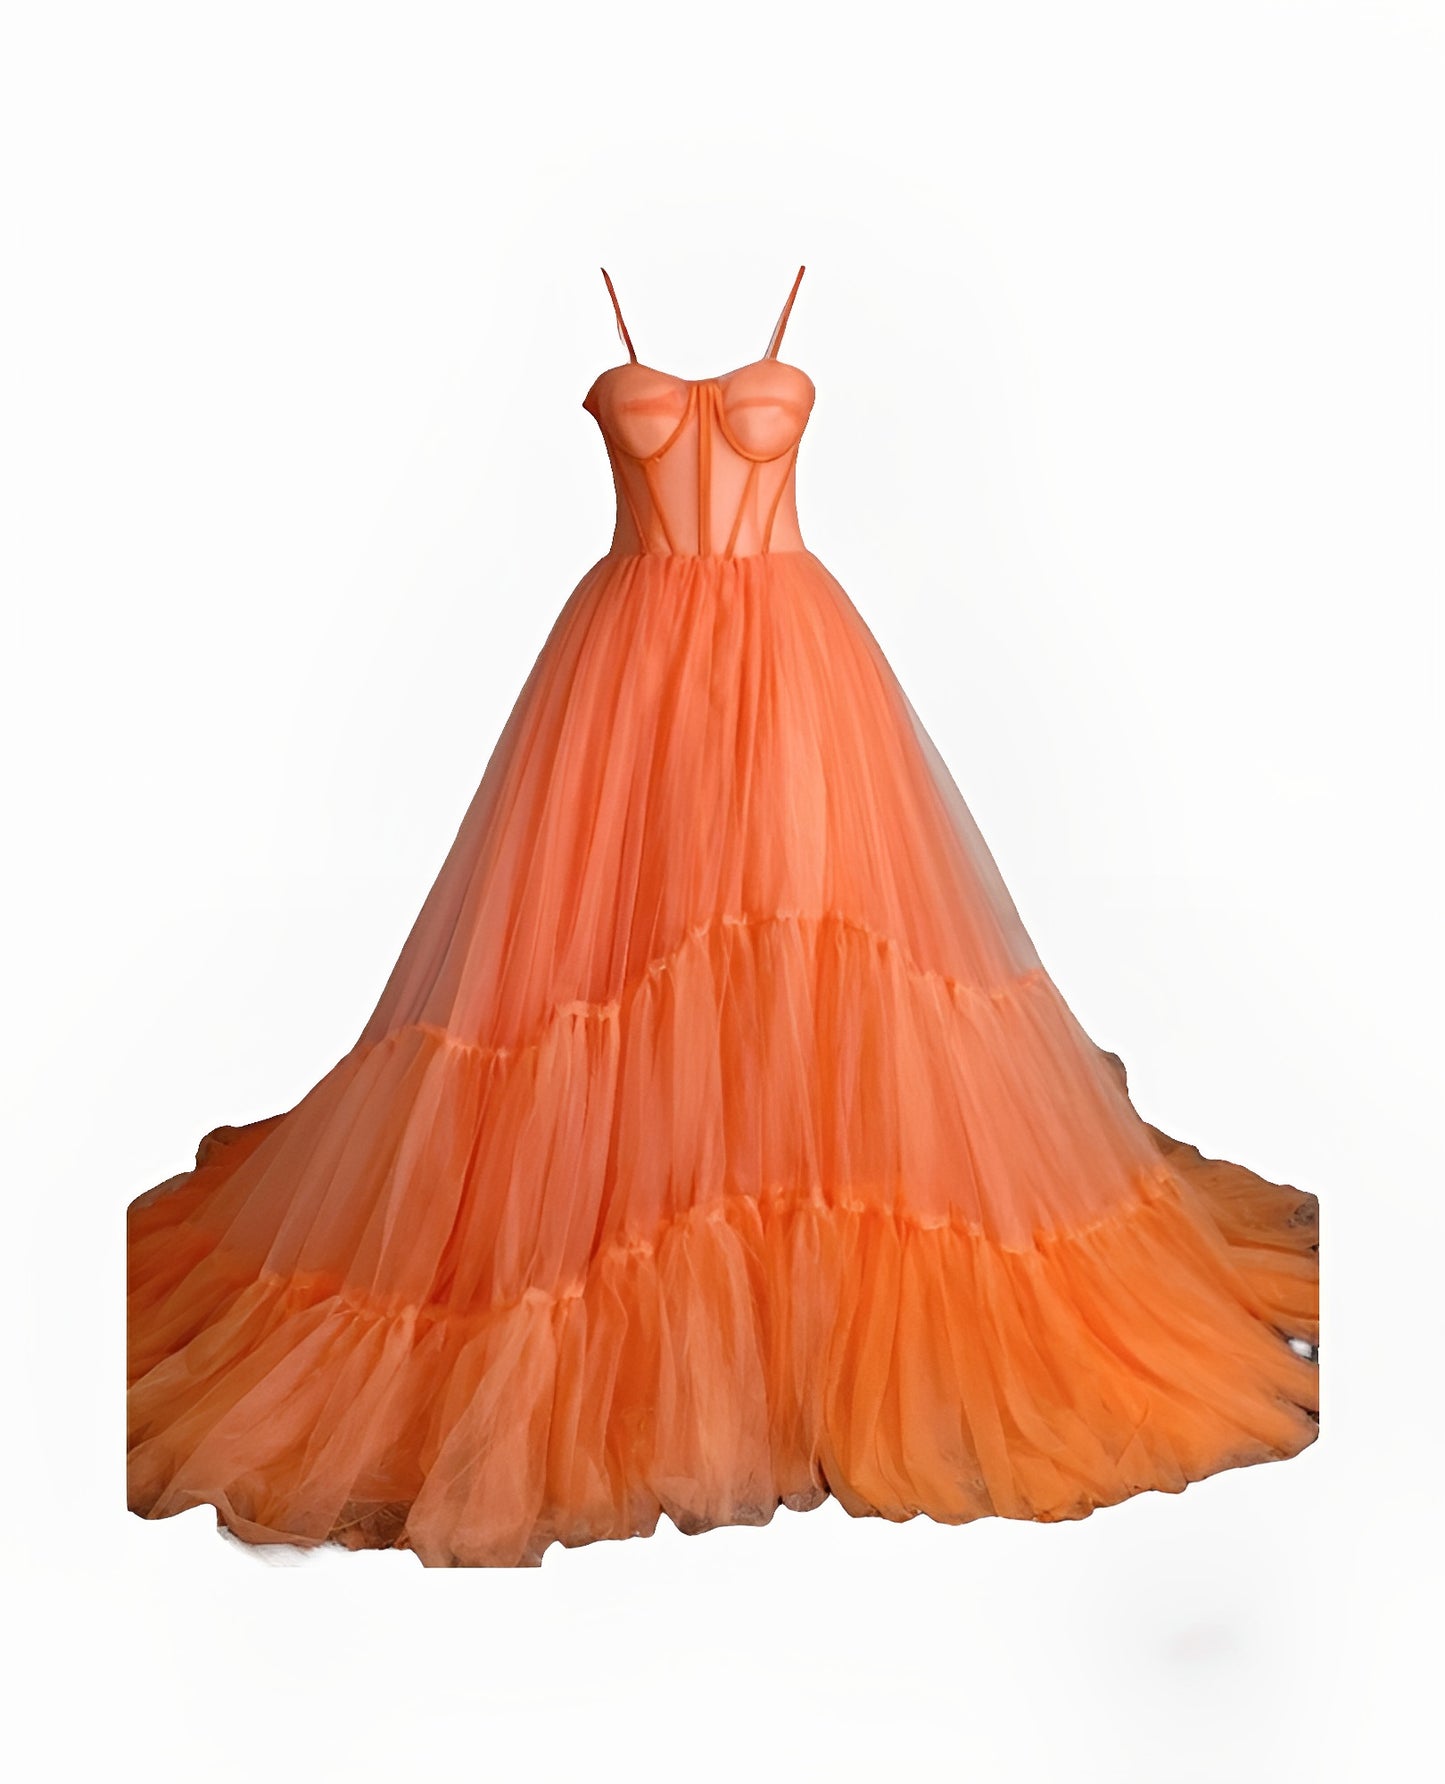 Orange Long Tulle Bridal Dress